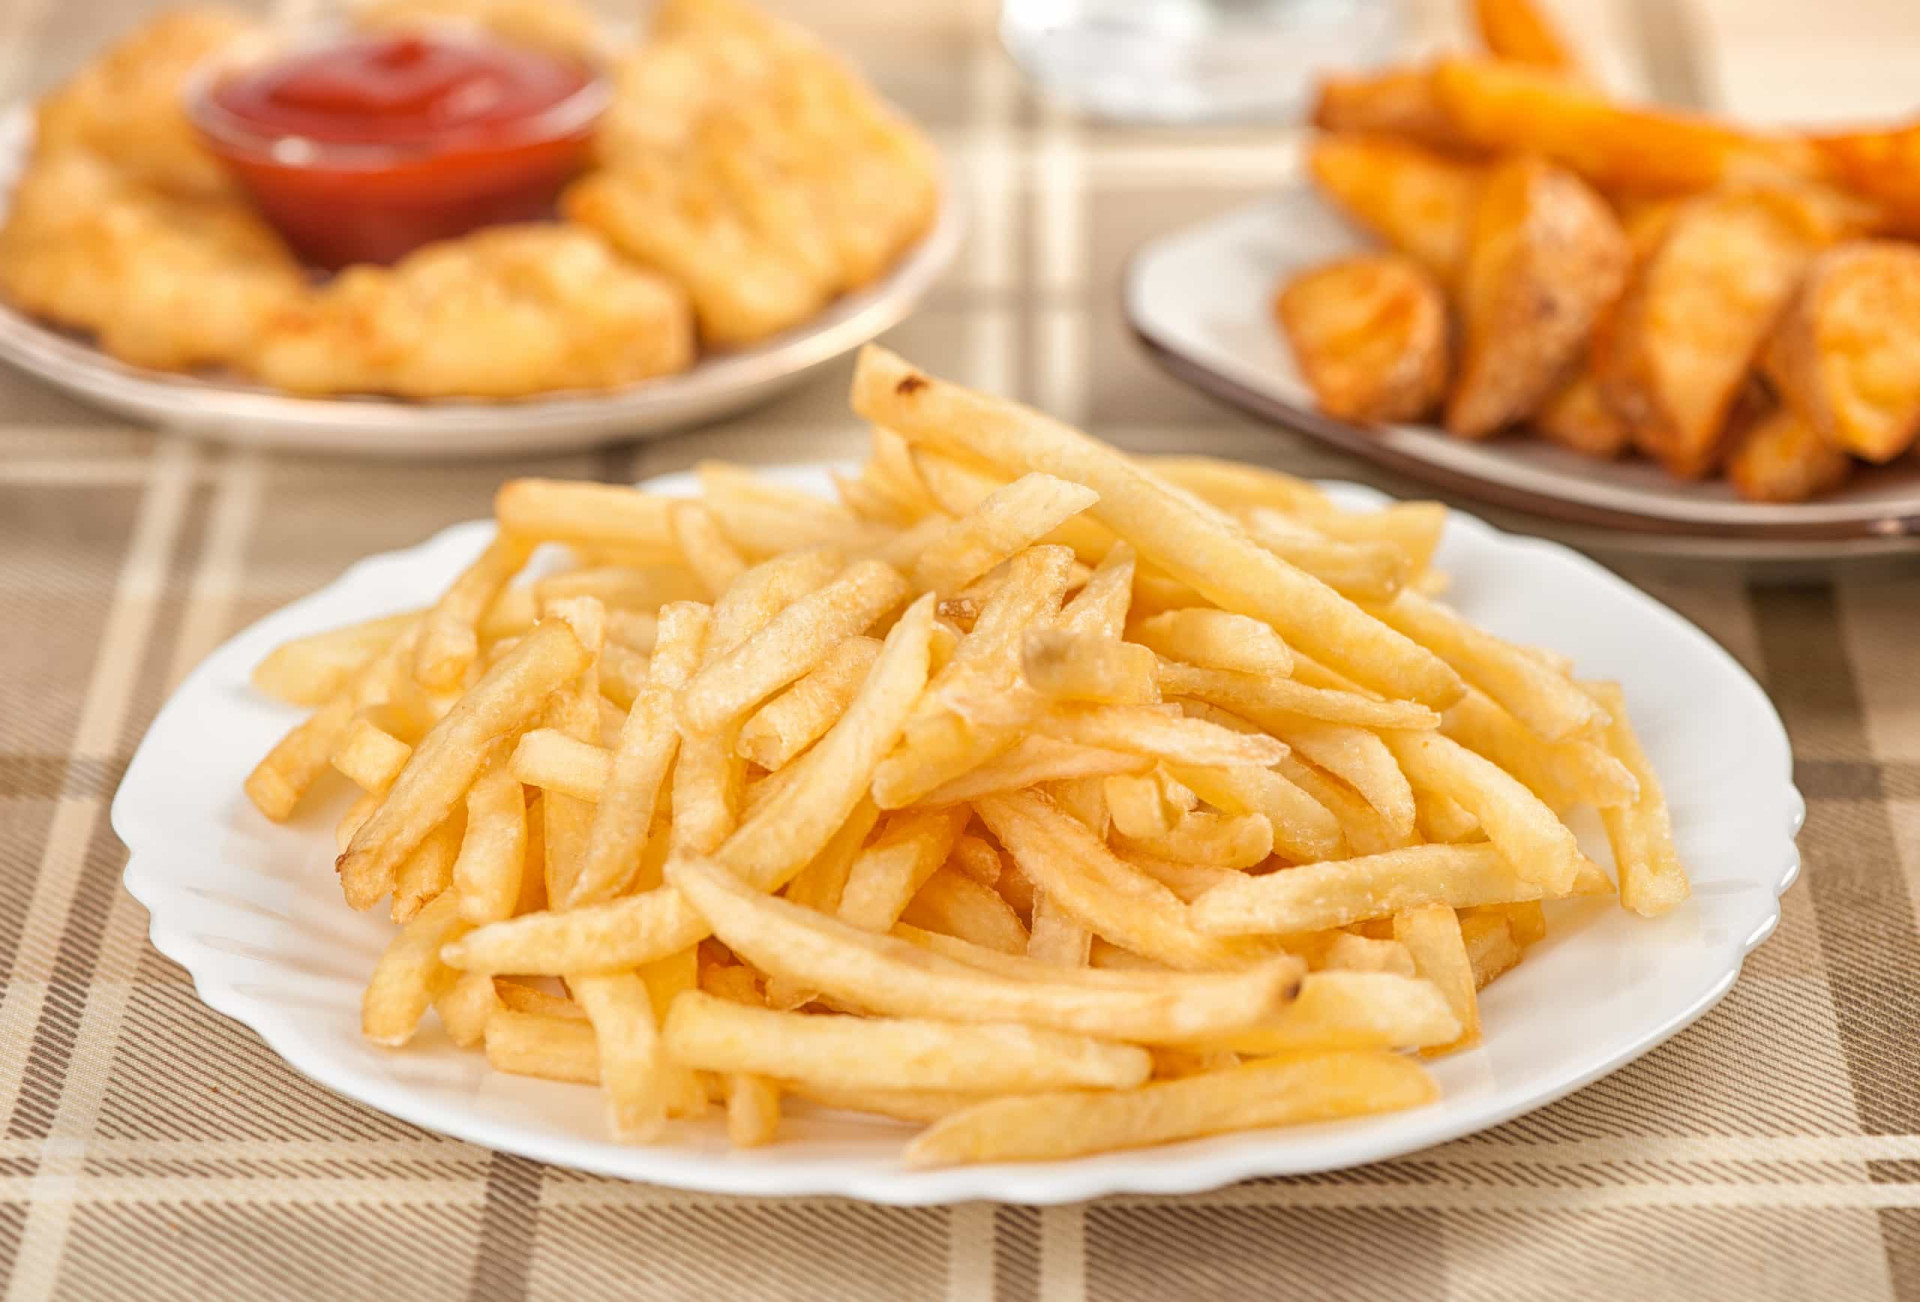 The consumption of trans fats can increase bad cholesterol and decrease good cholesterol.